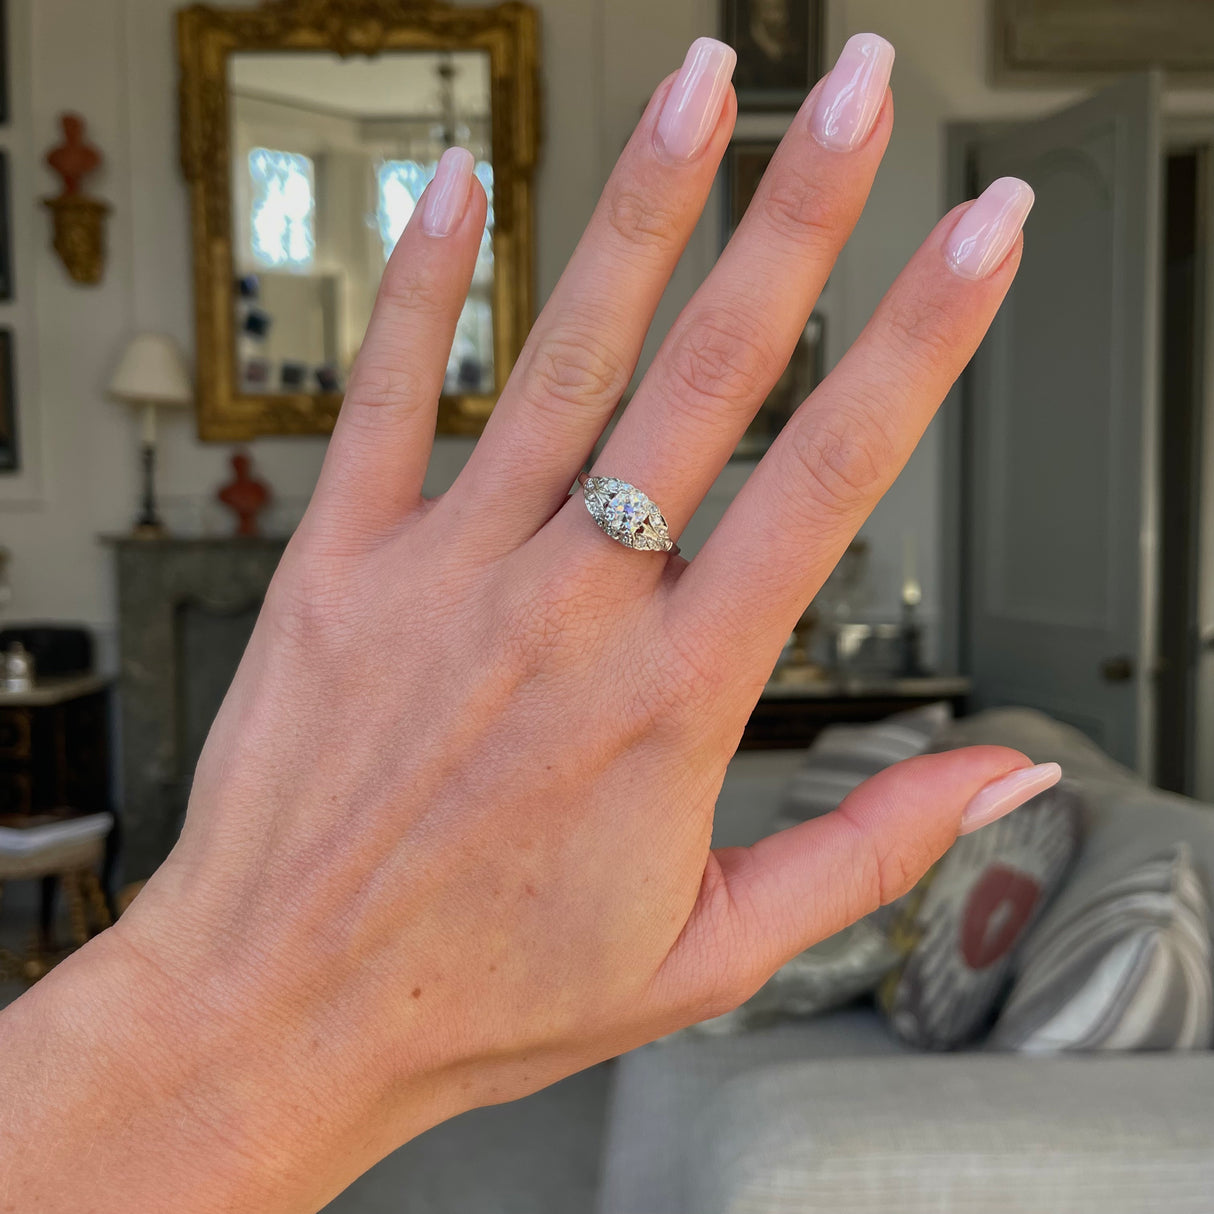 Art Deco diamond engagement ring, worn on hand.